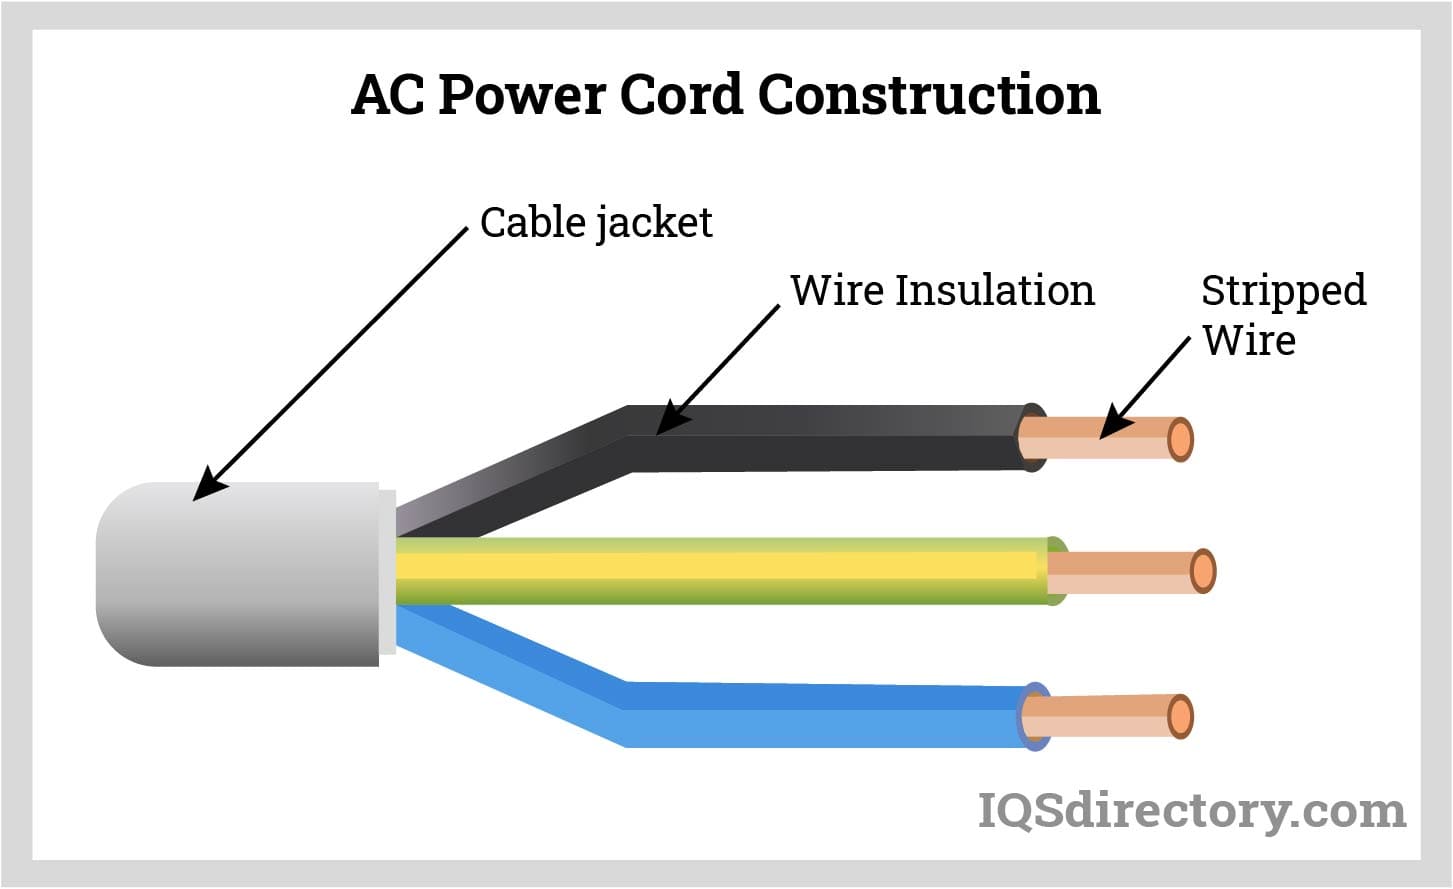 AC Power Cord Construction